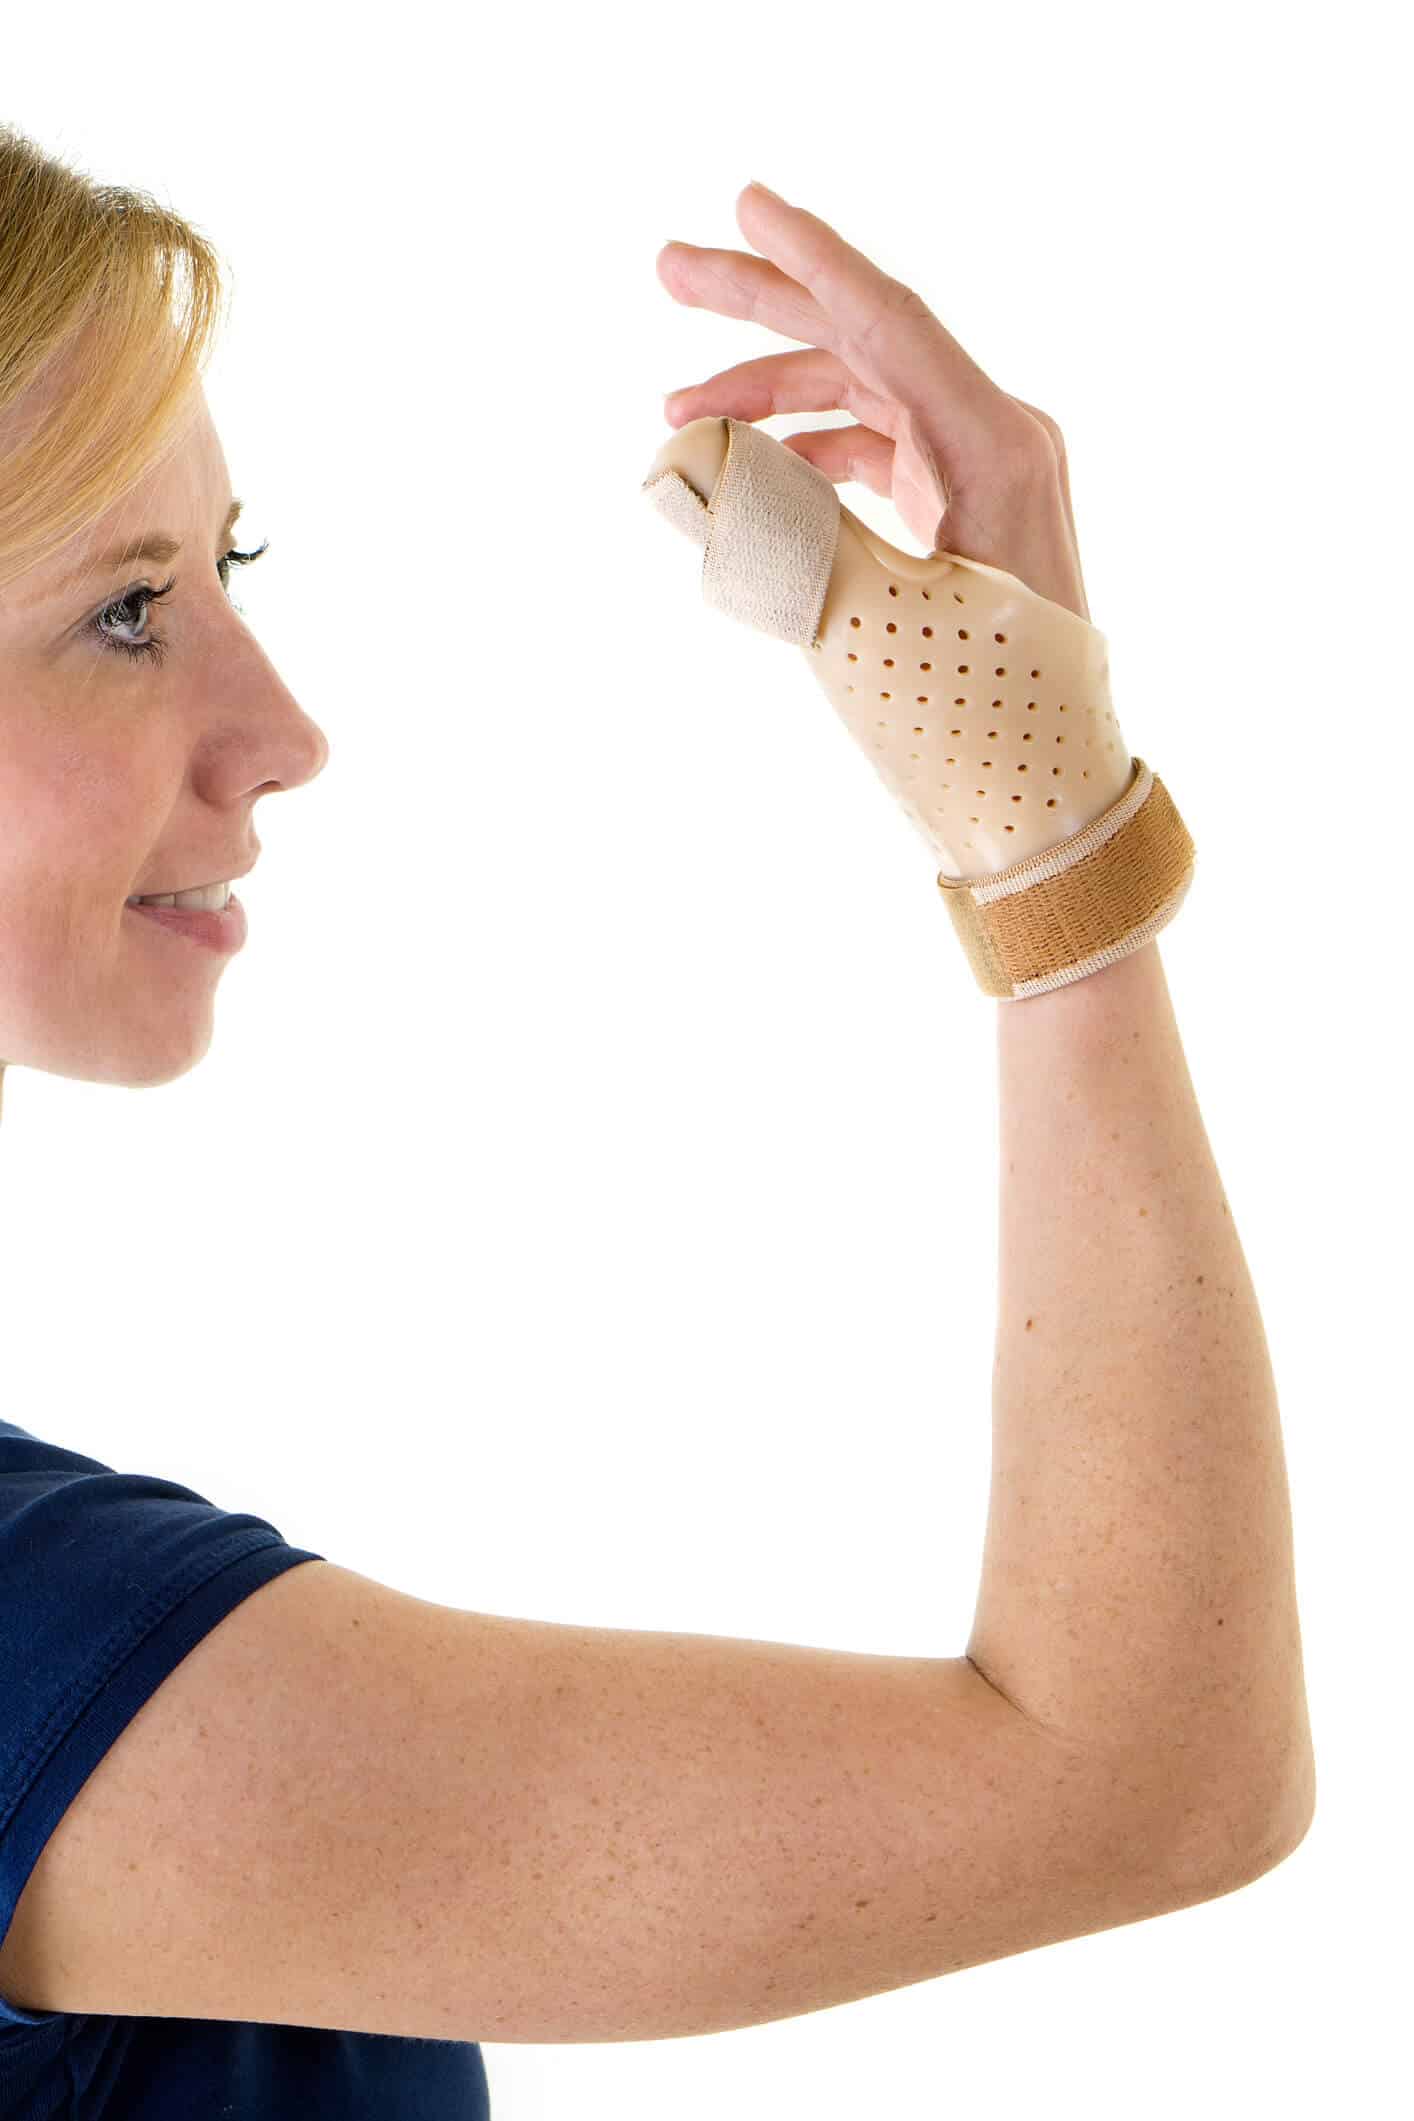 Young woman wearing a thumb brace